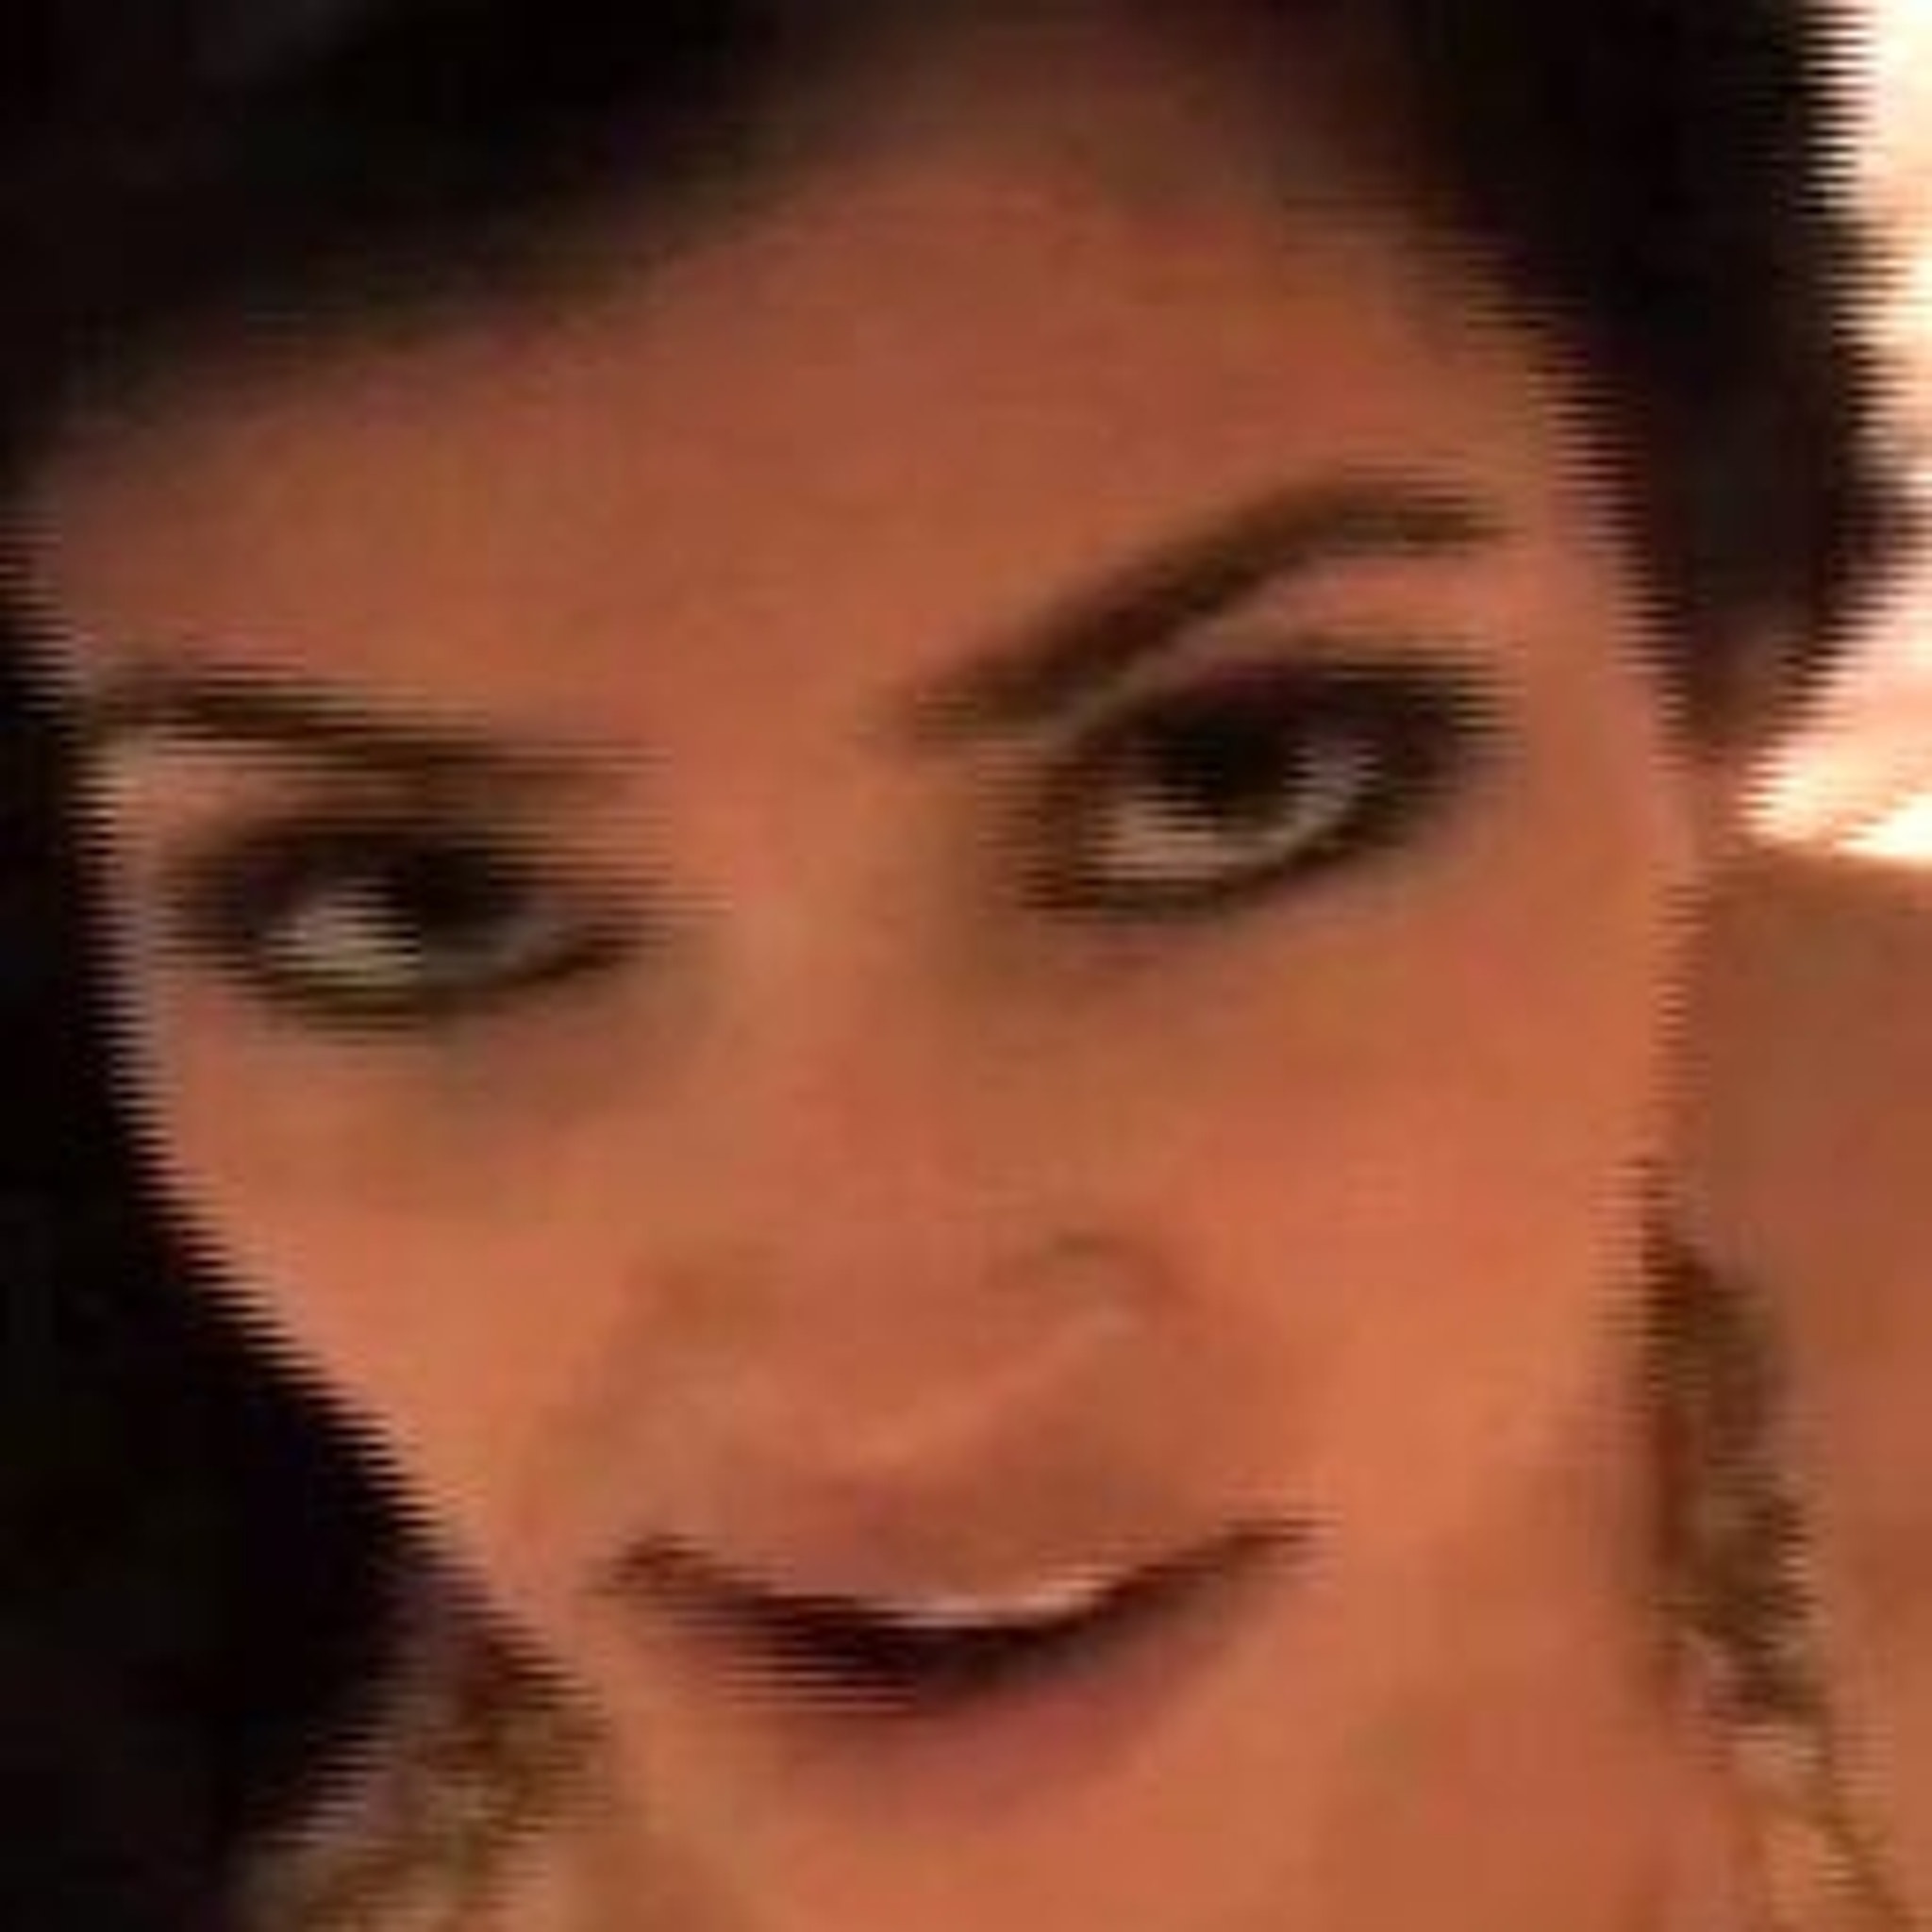 Kim Kardashian Pron Video - Kim Drops Sex Tape Lawsuit, Gets a Big Load of Cash